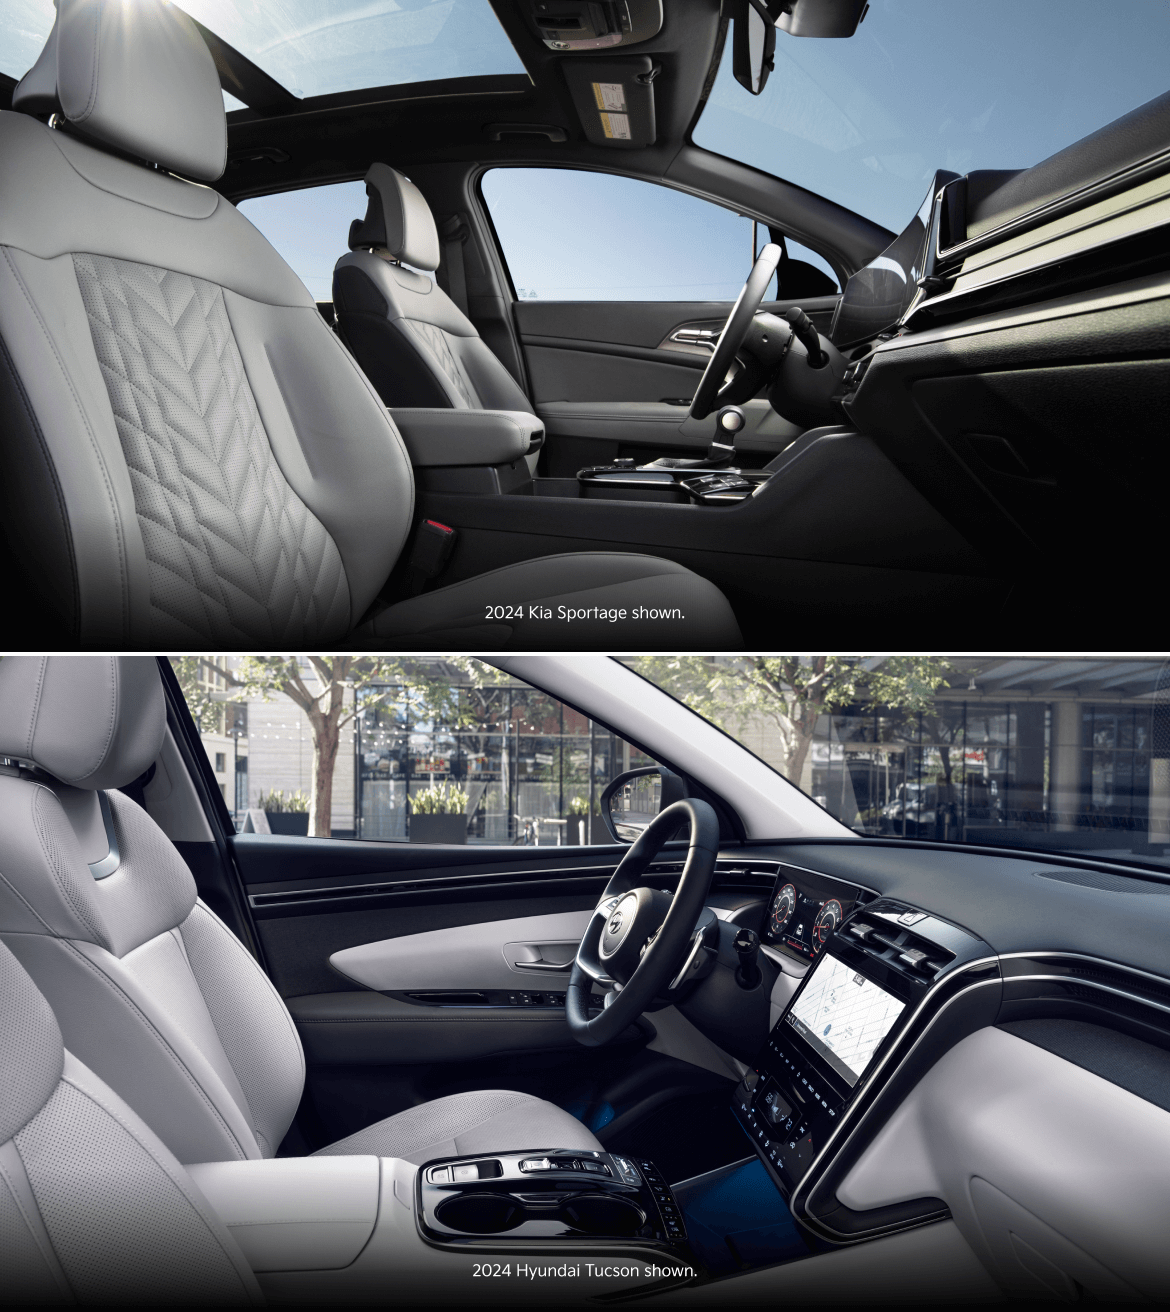 Hyundai Tucson vs. Kia Sportage: Interior Comparison